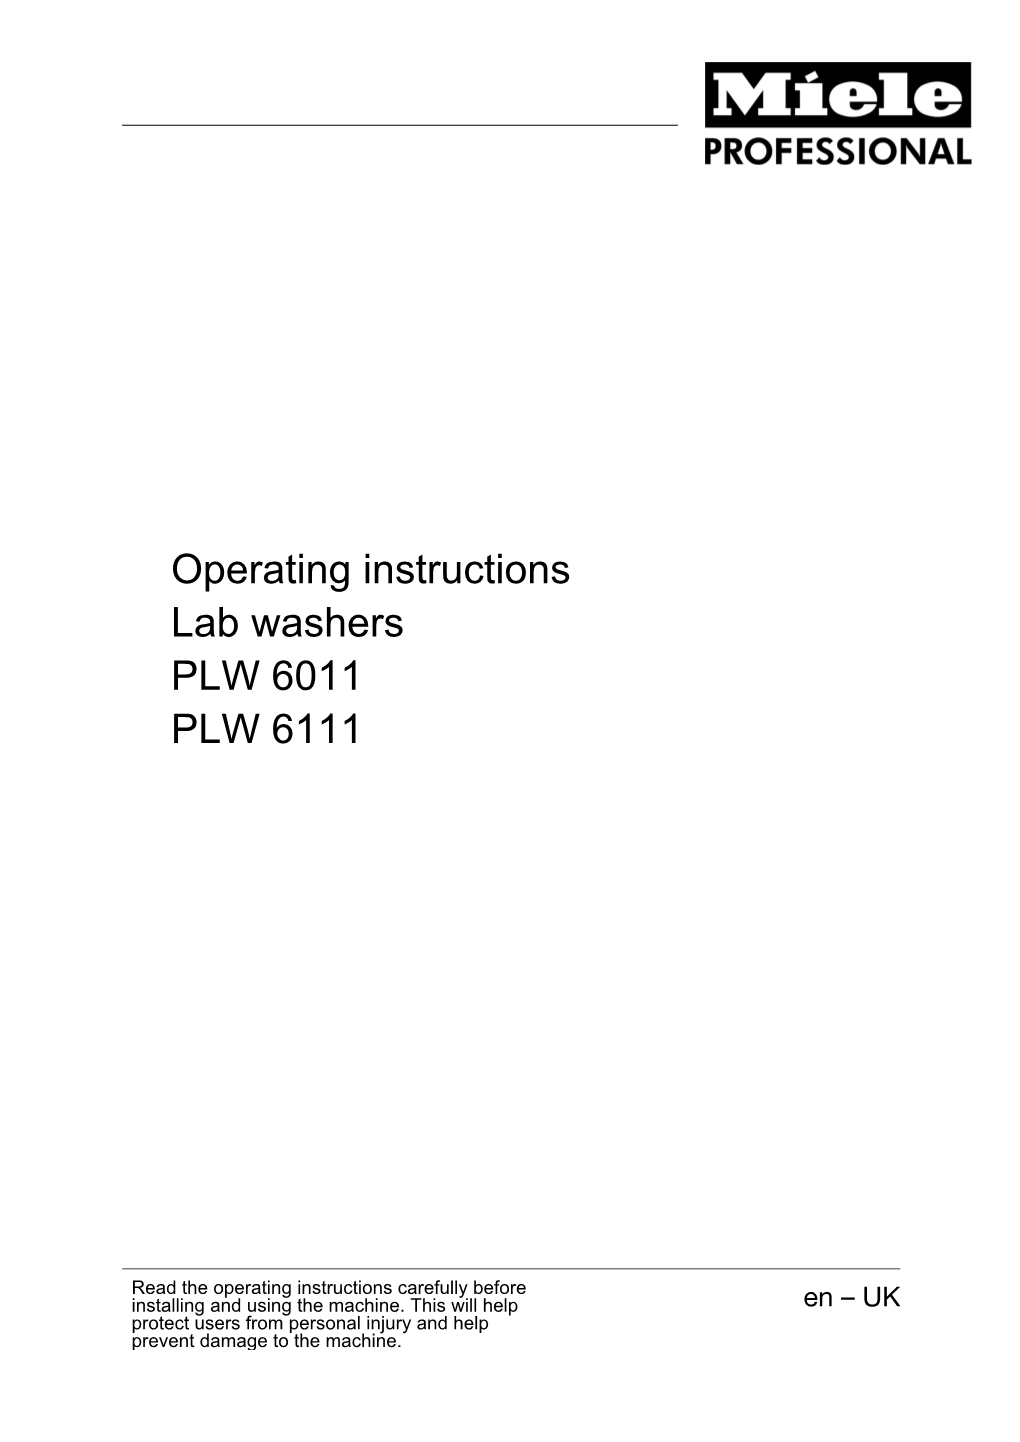 Operating Instructions Lab Washers PLW 6011 PLW 6111